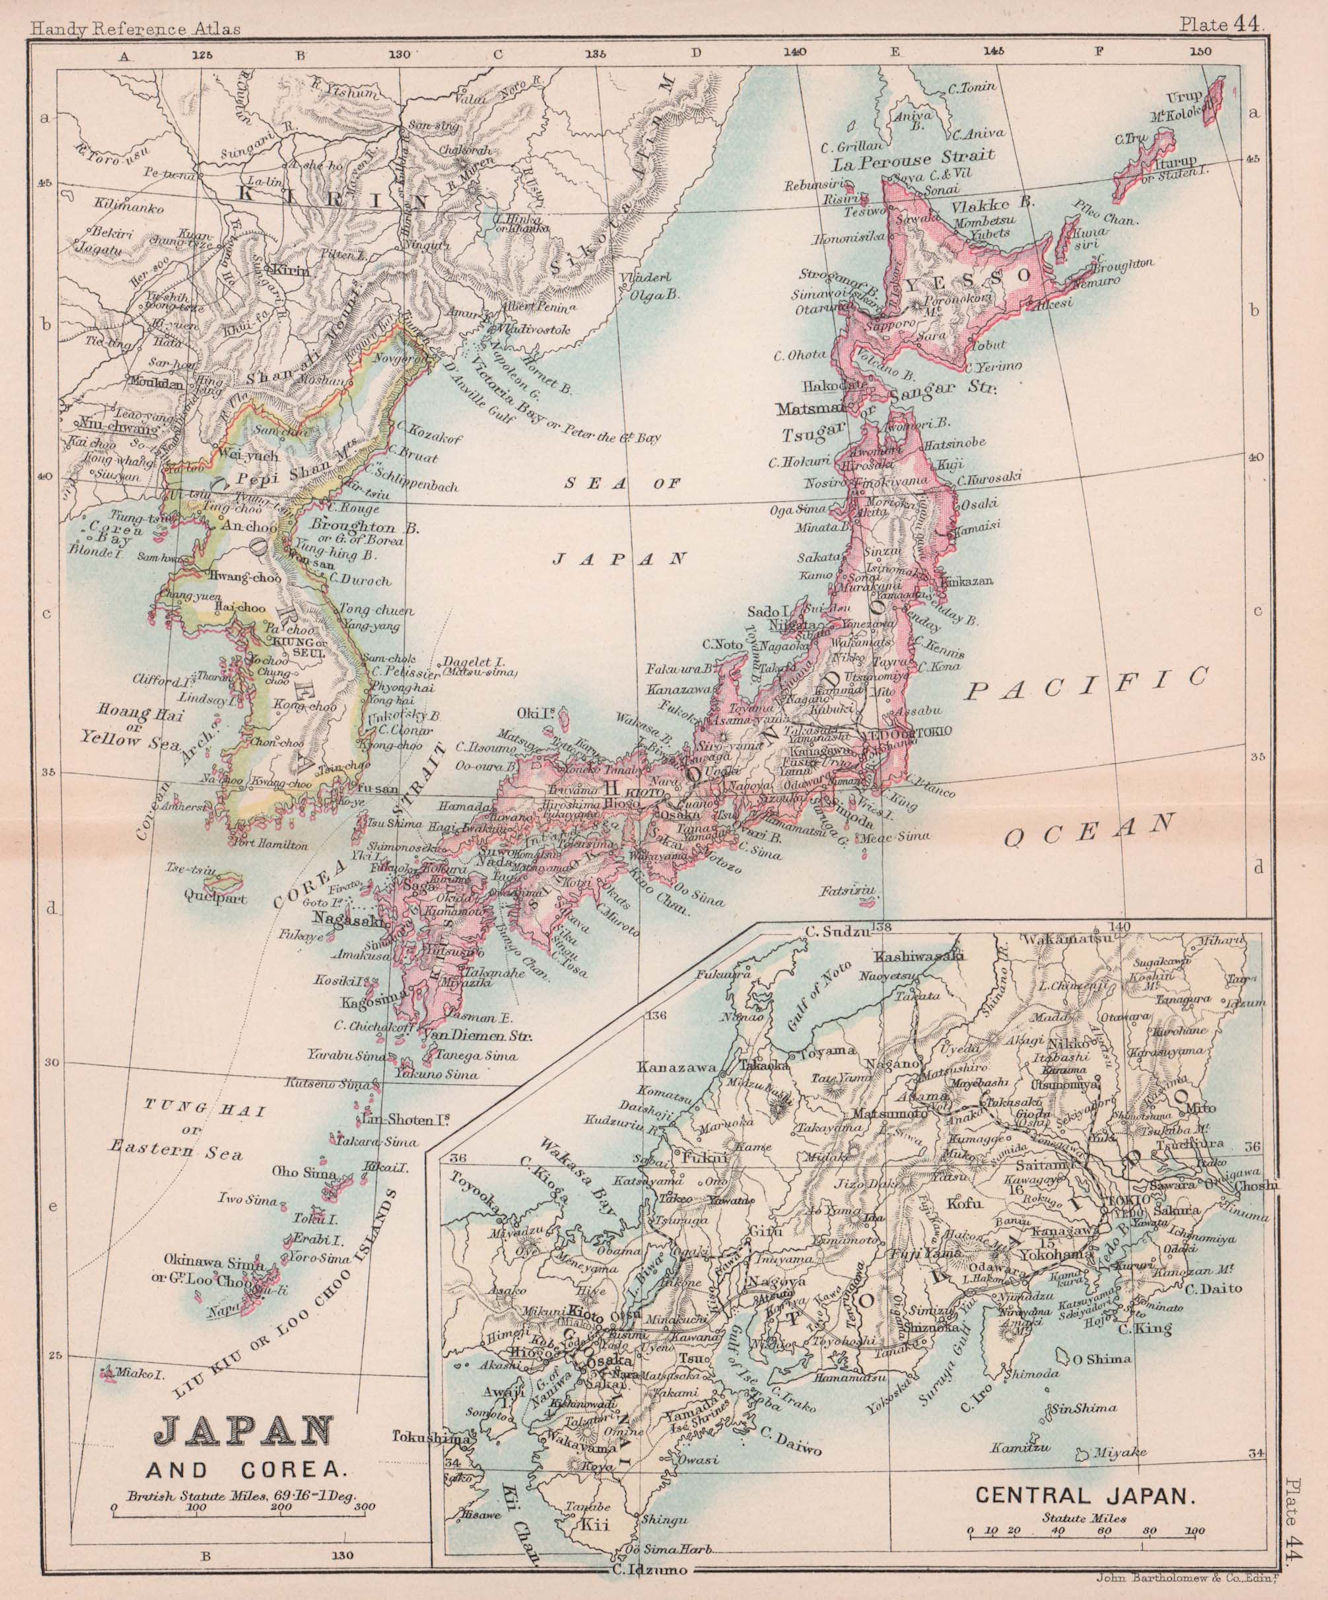 Associate Product Japan & Corea antique map. BARTHOLOMEW 1893 old vintage plan chart